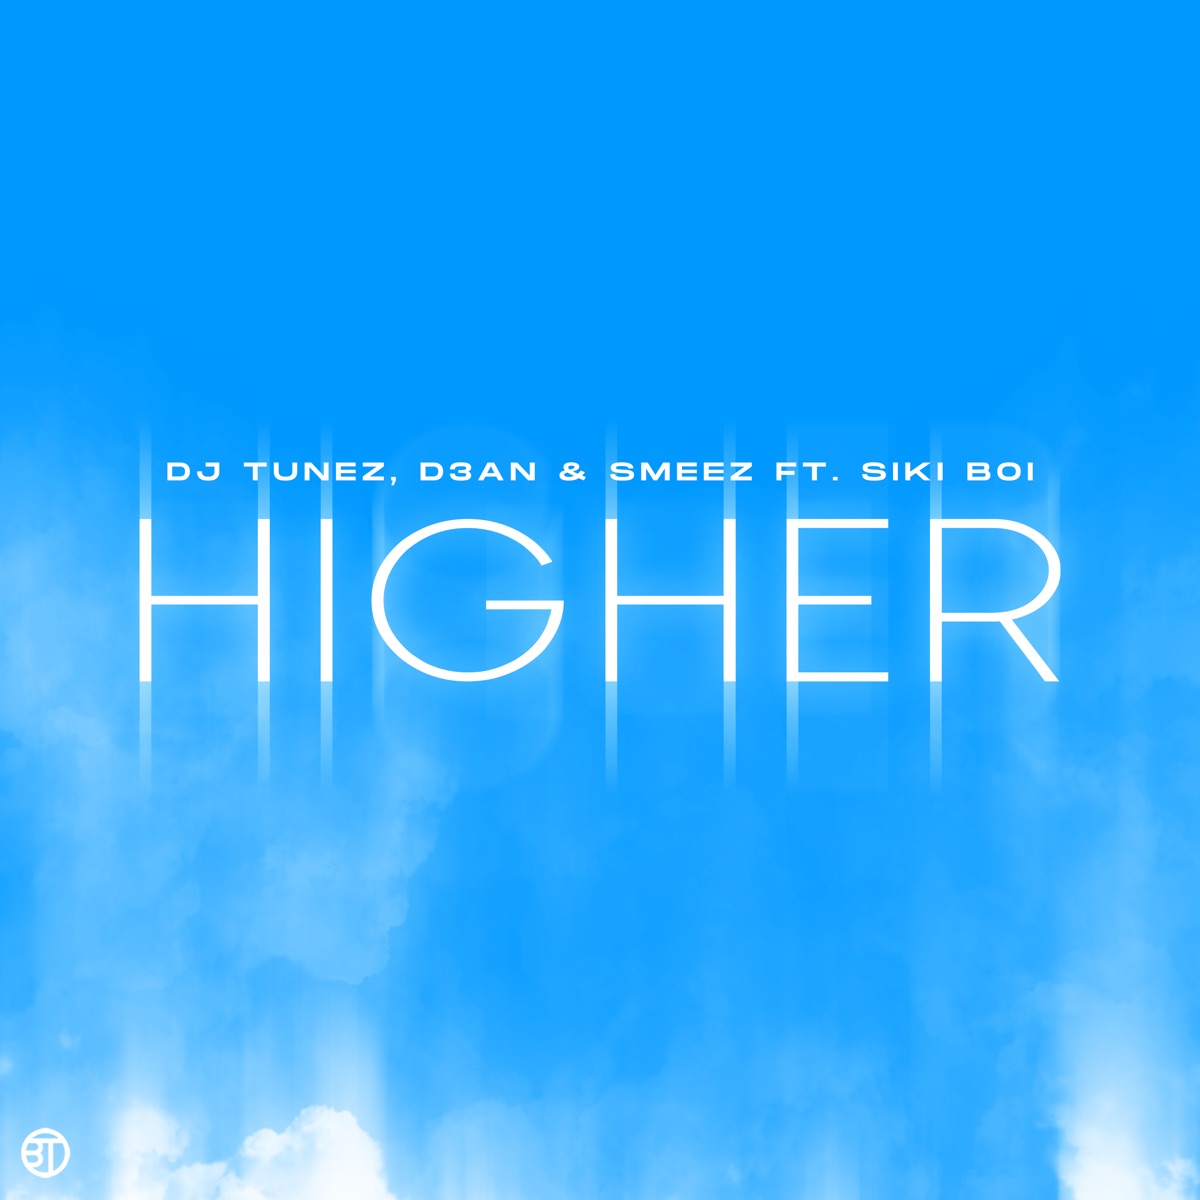 DJ Tunez, D3an & Smeez - Higher (feat. Sikiboi) - Single